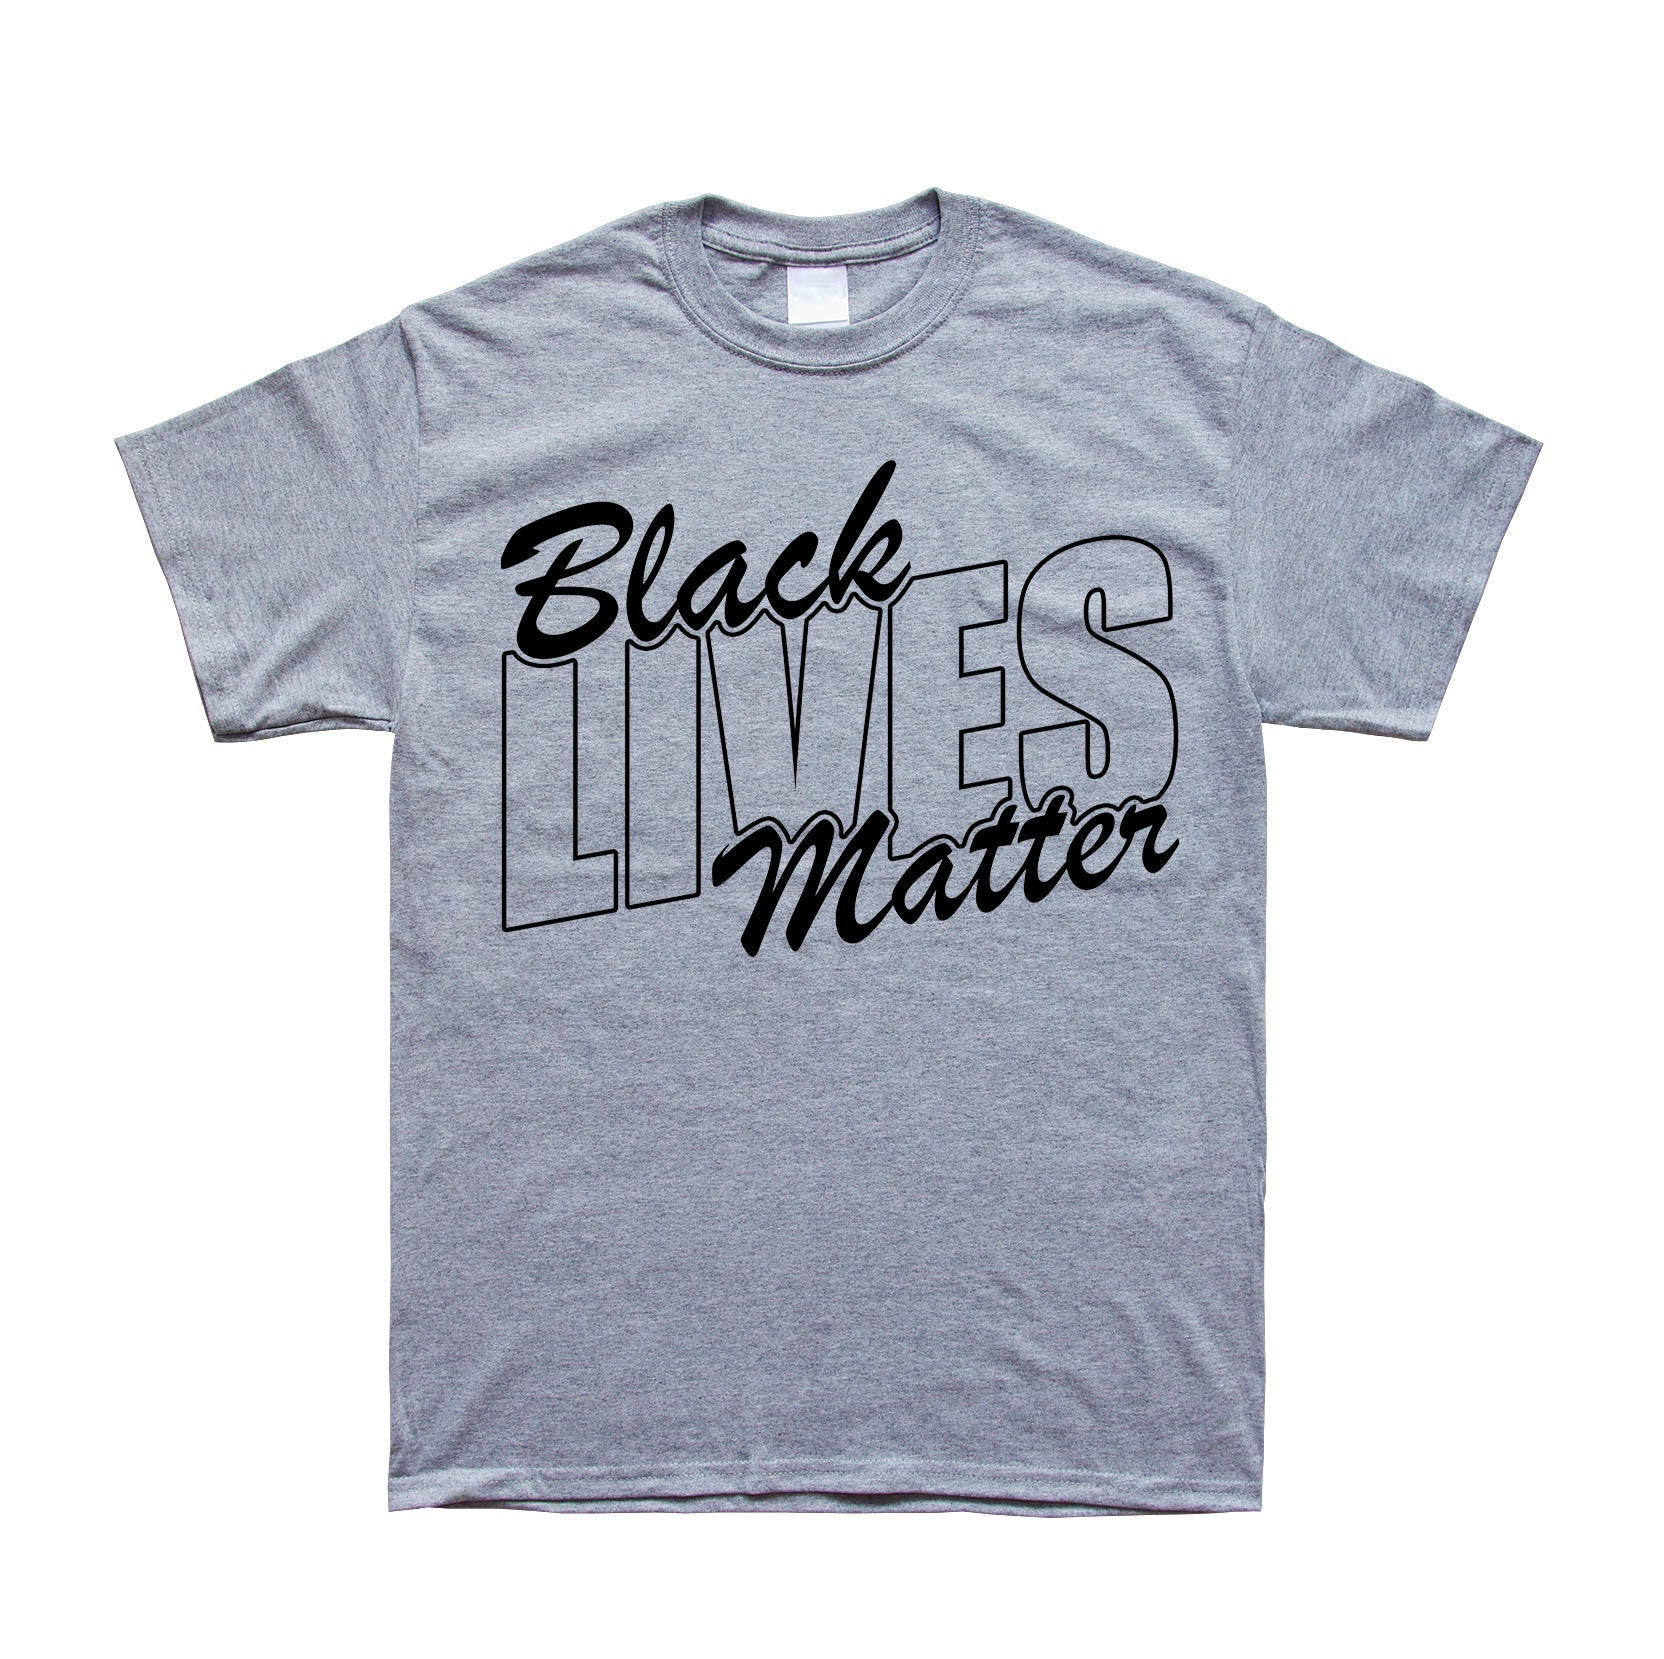 Black Lives Matter Shirt - Black10.com